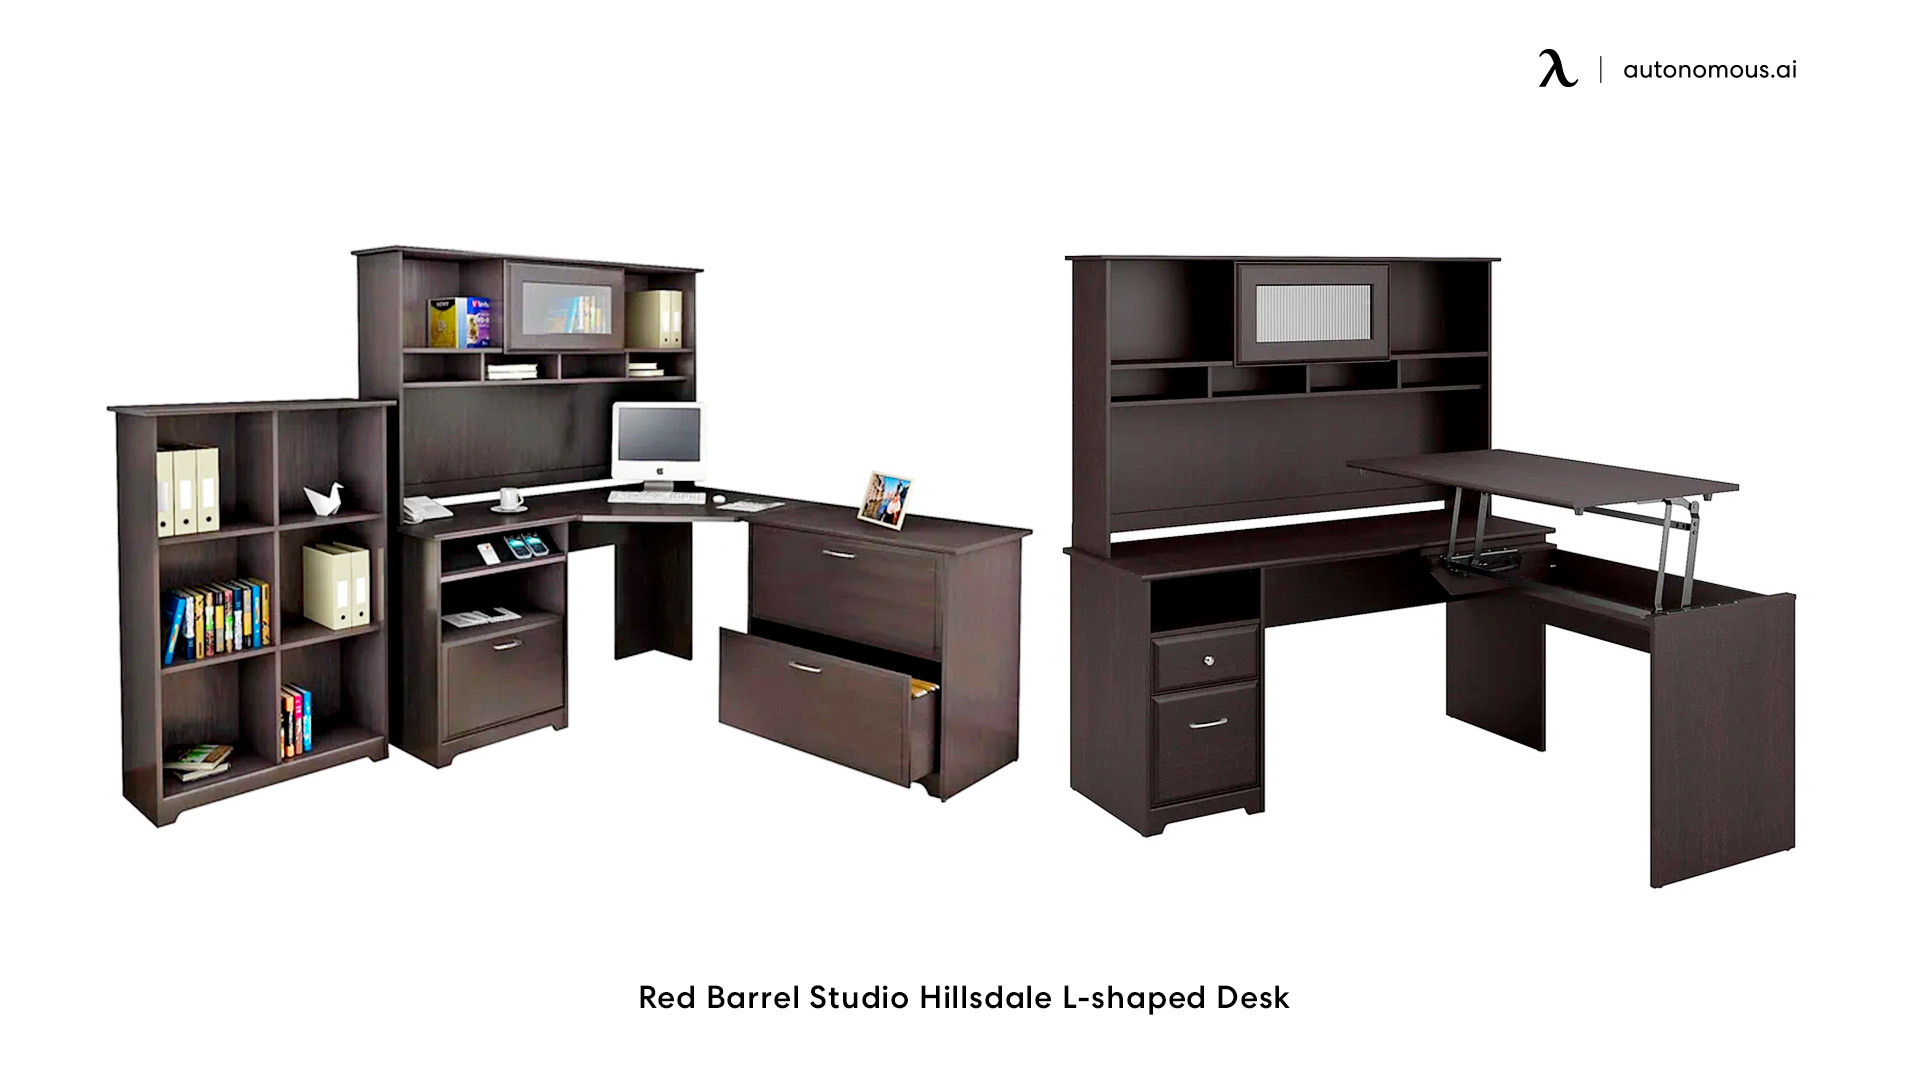 L-shaped Desk by Red Barrel Studio